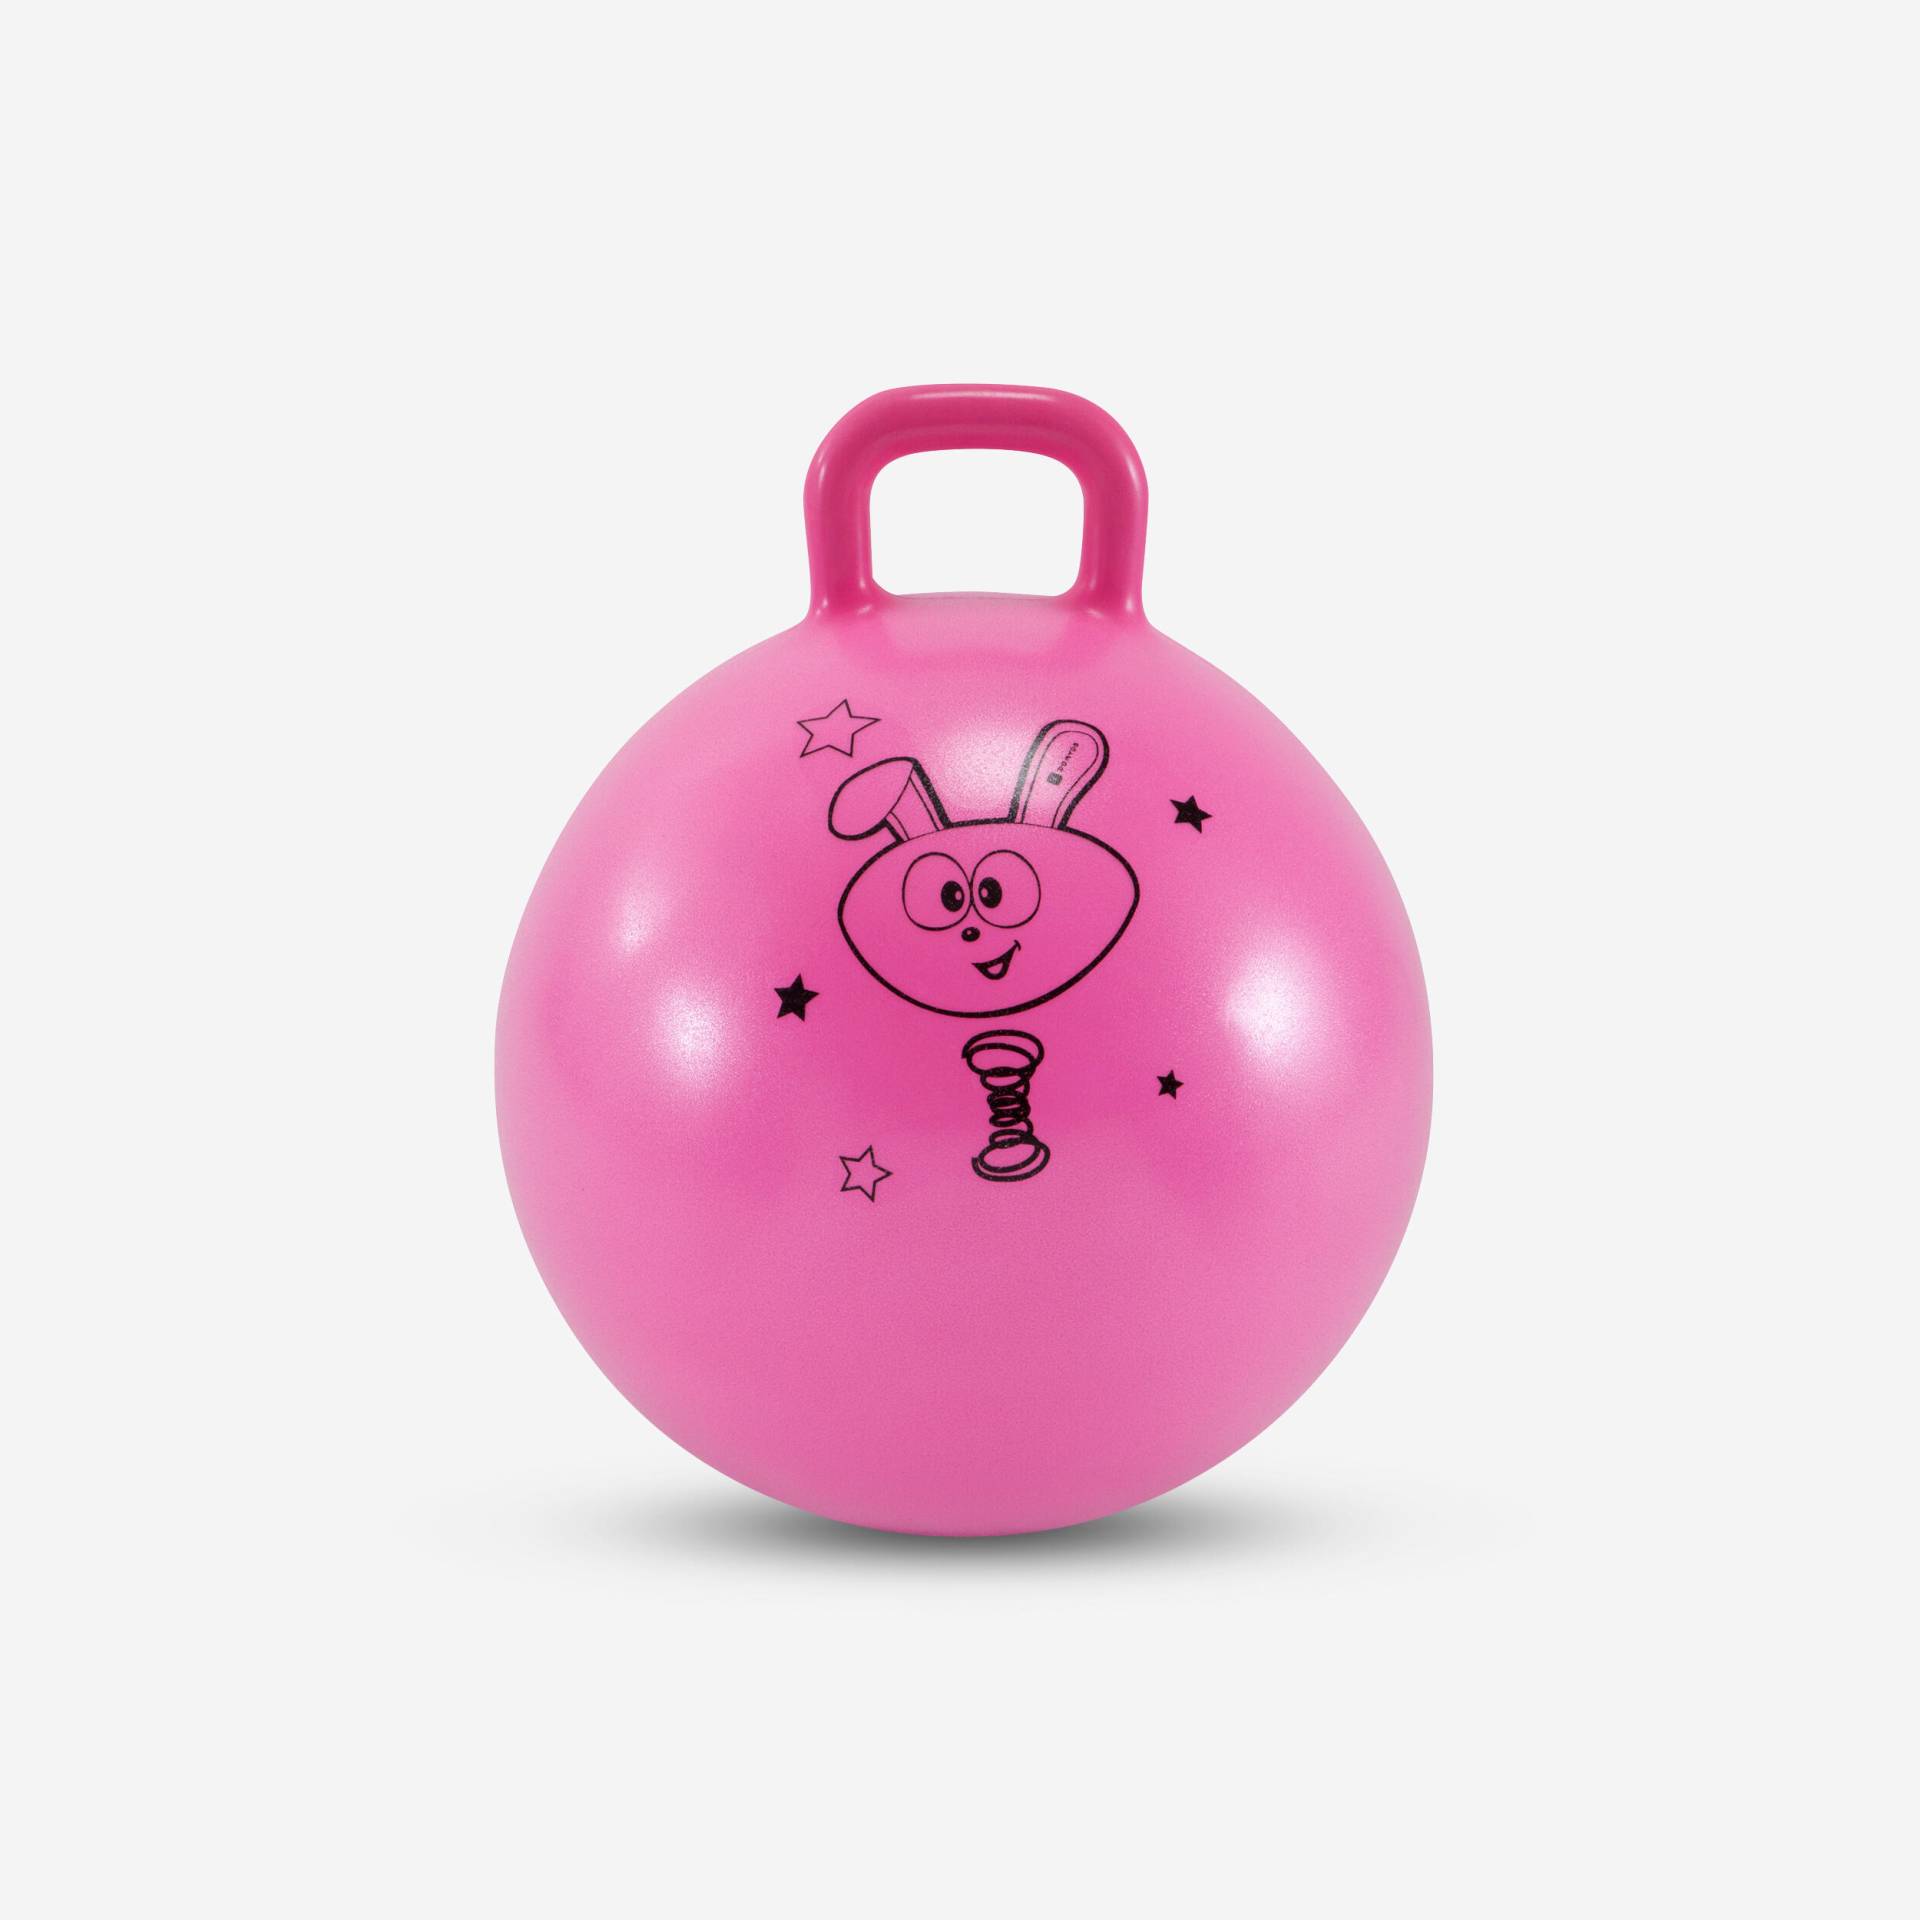 Hüpfball Resist 45 cm Gym Kinder rosa von Domyos